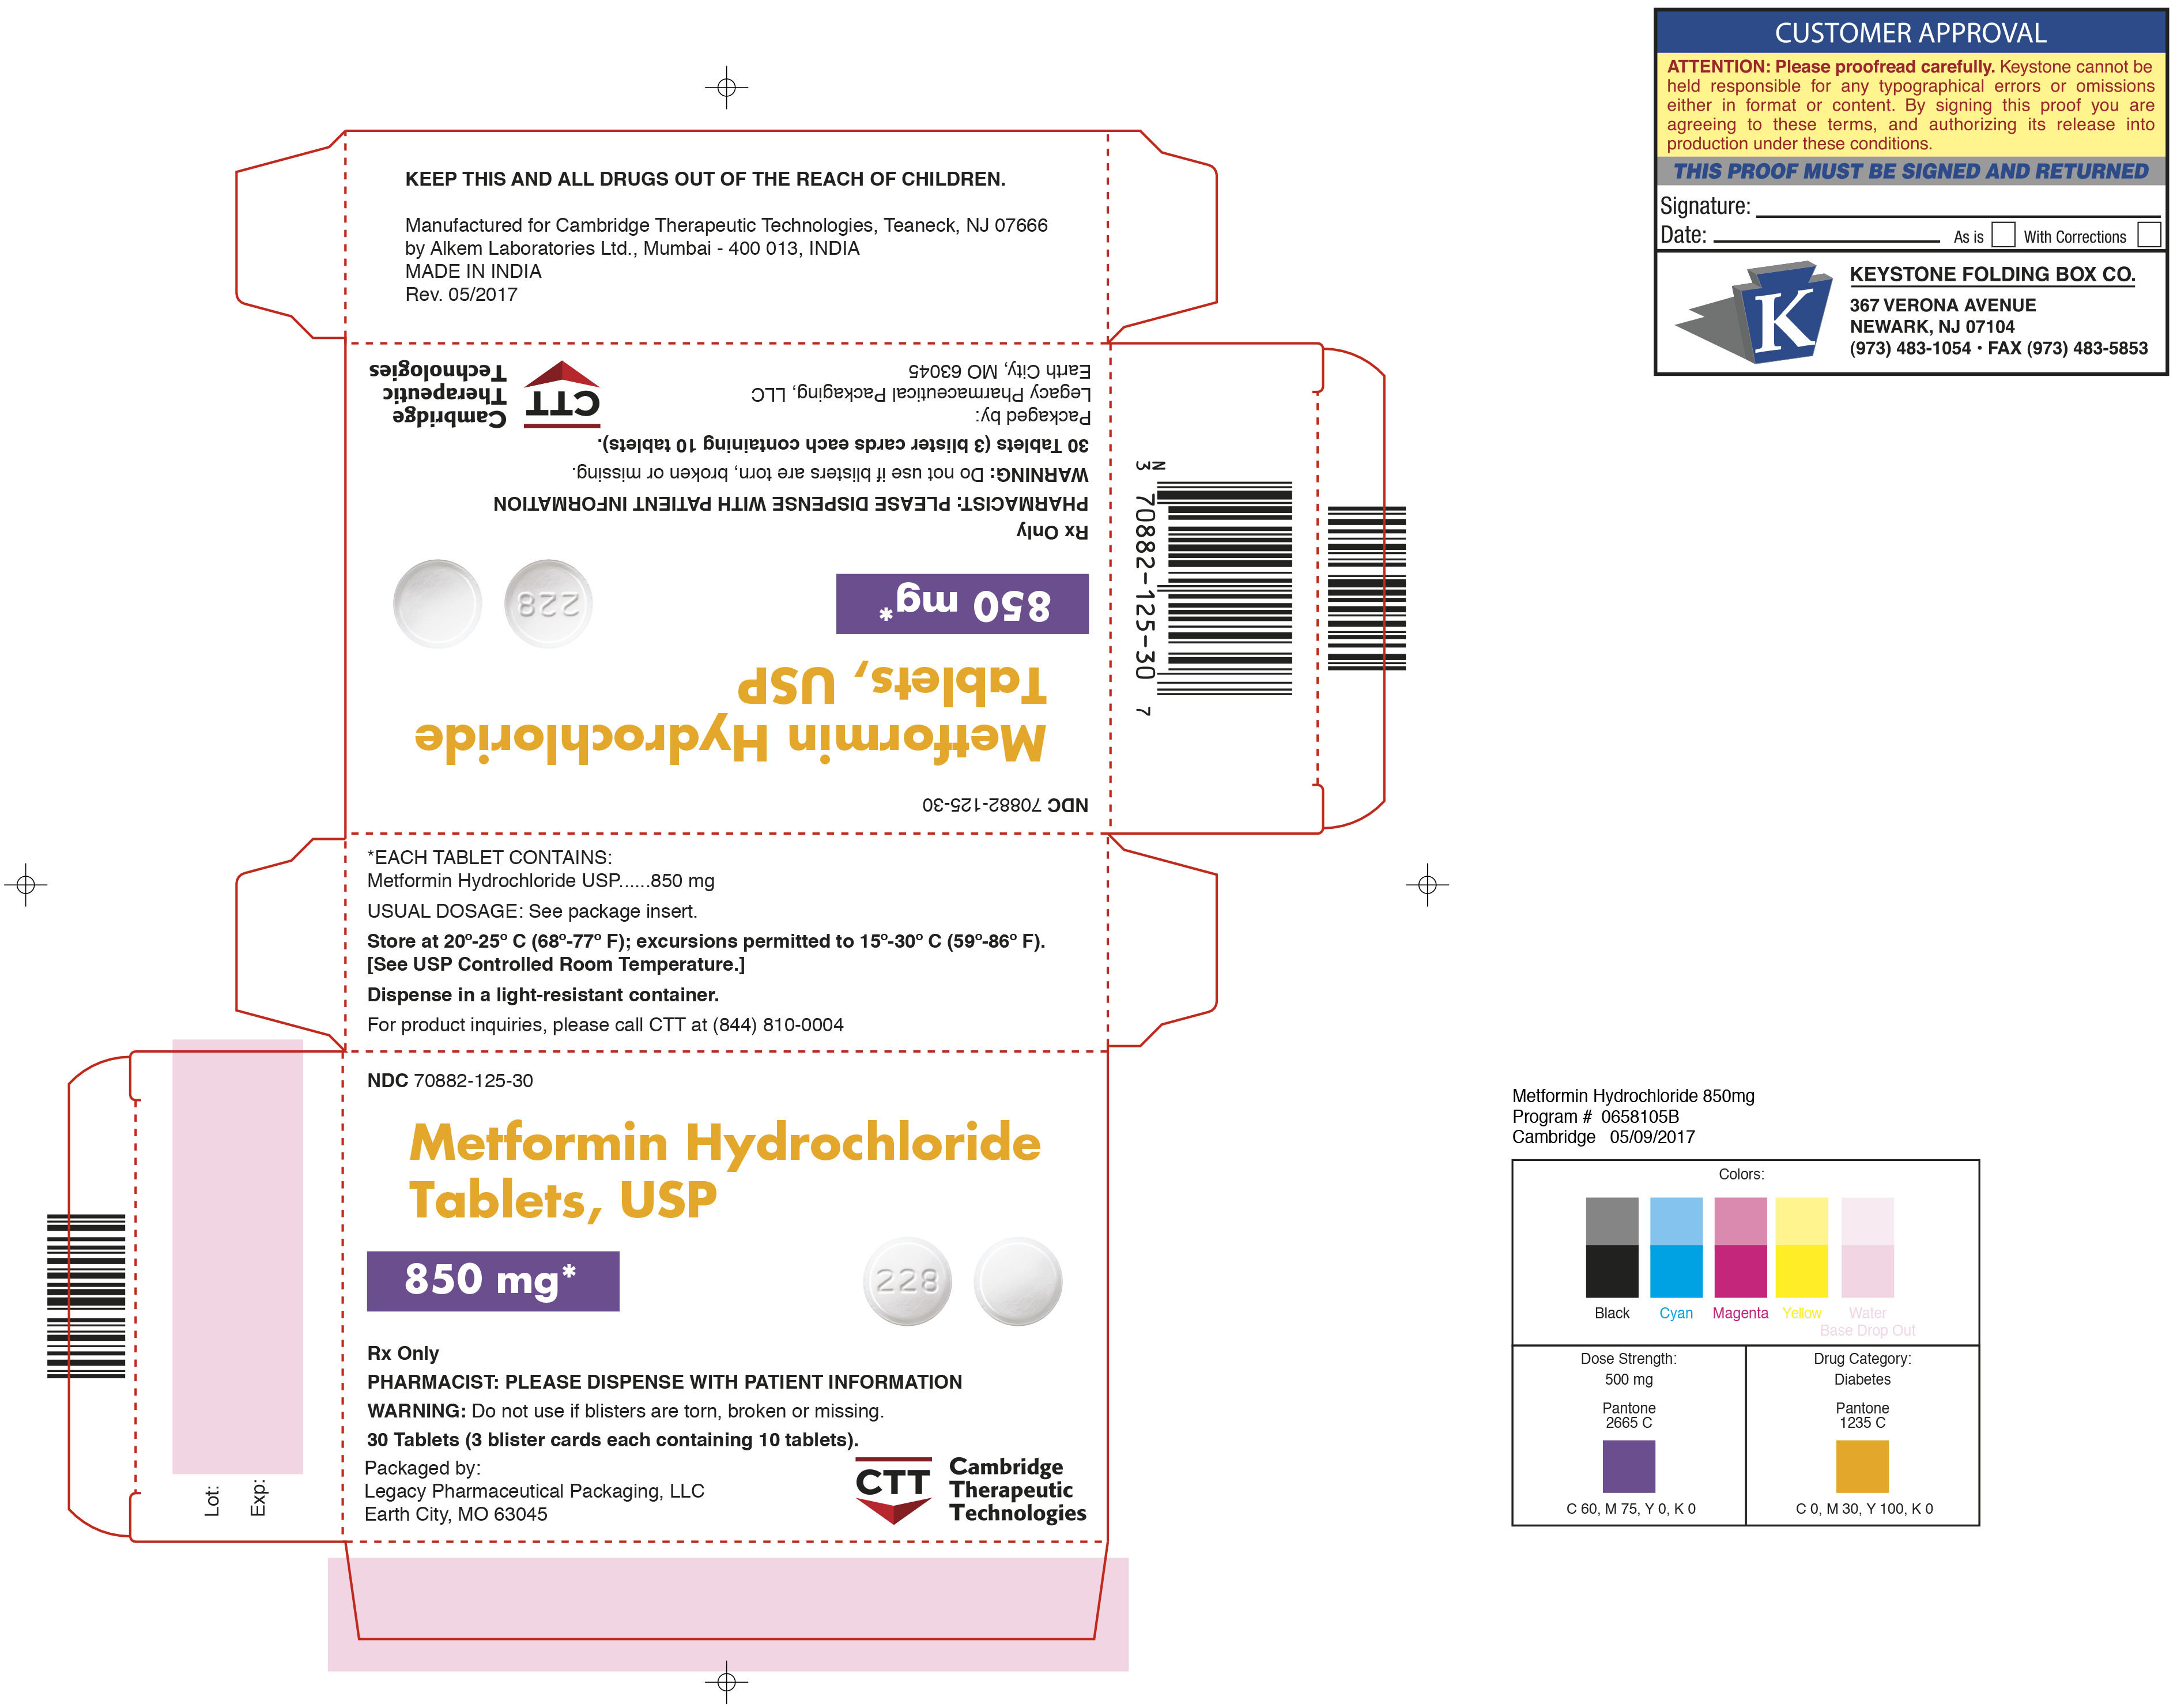 Metformin Hydrochloride Tablets USP 850mg